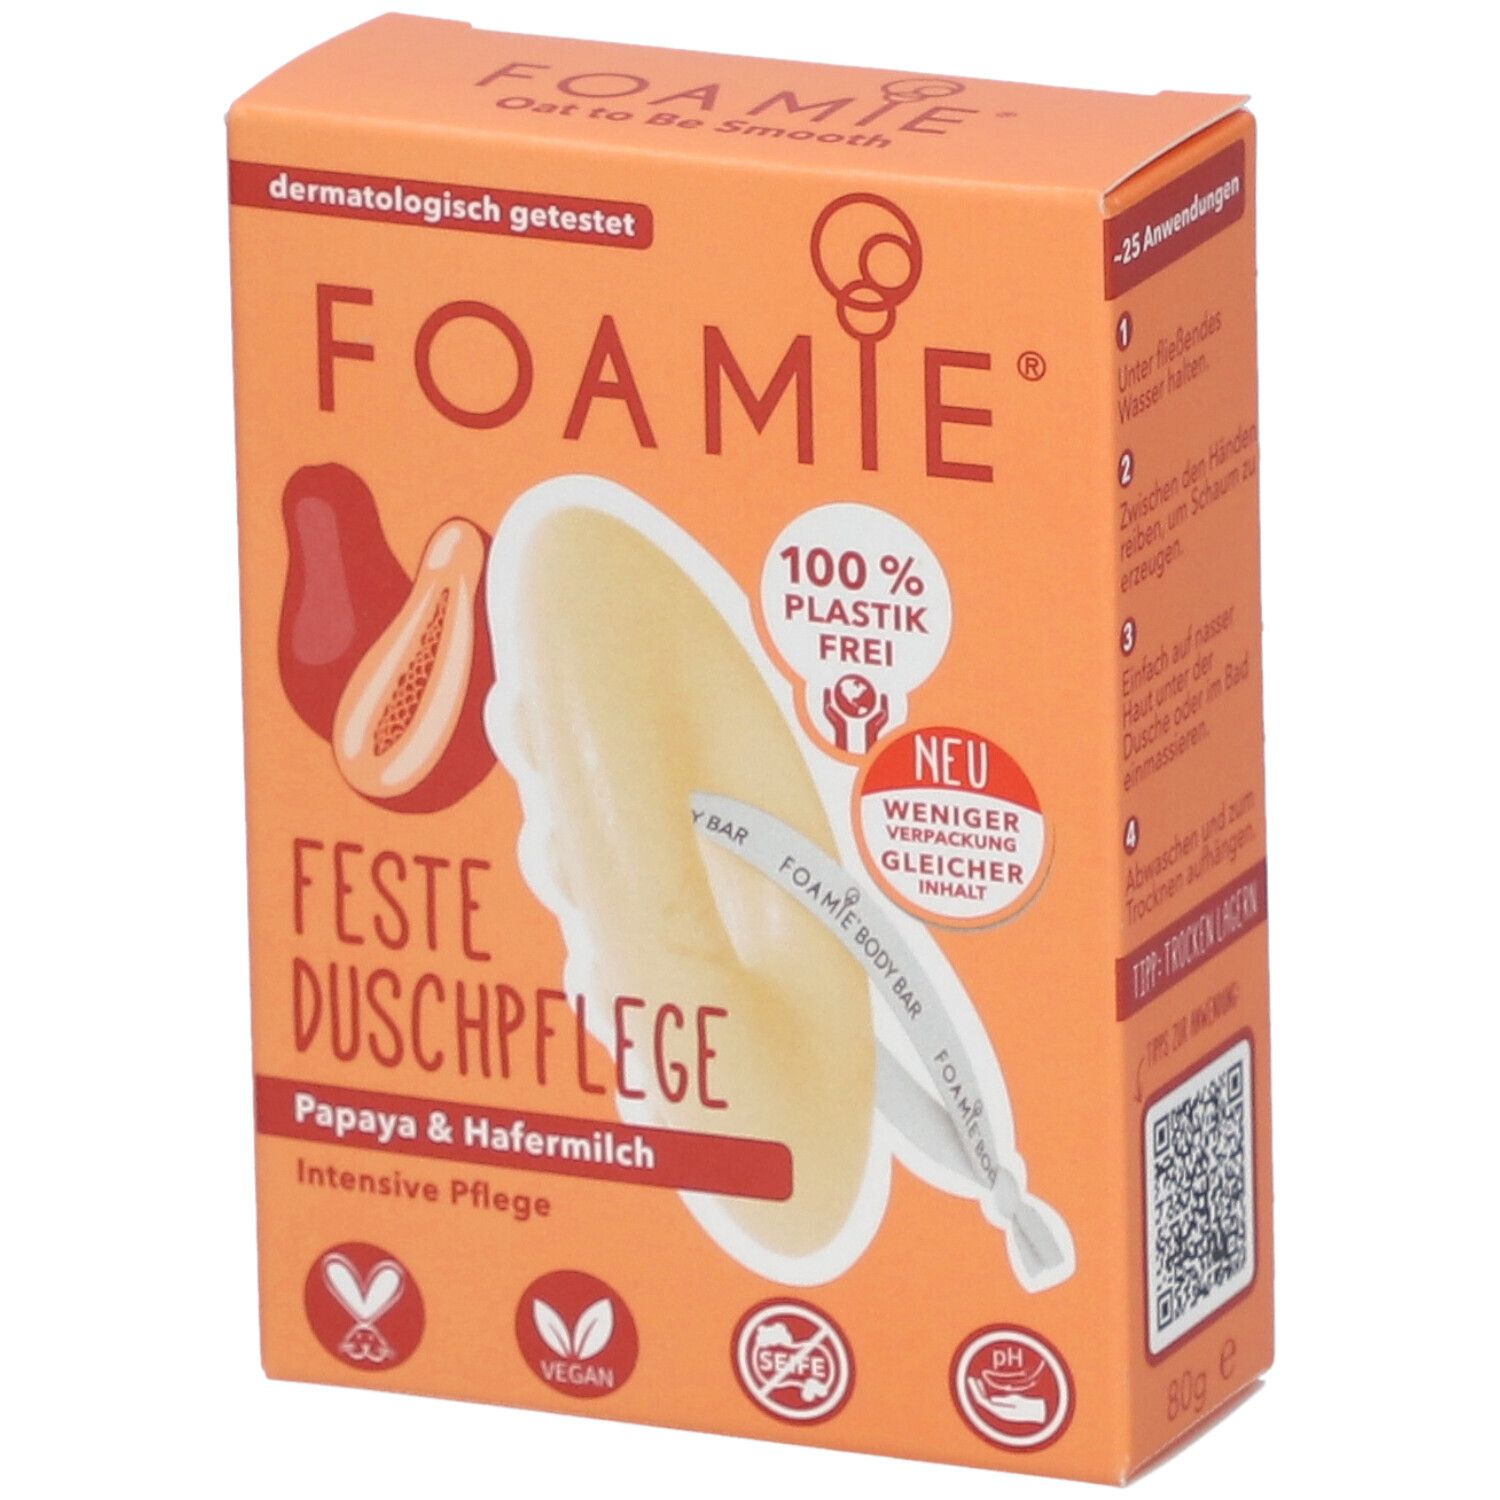 Foamie® Feste Duschpflege Papaya & Hafermilch